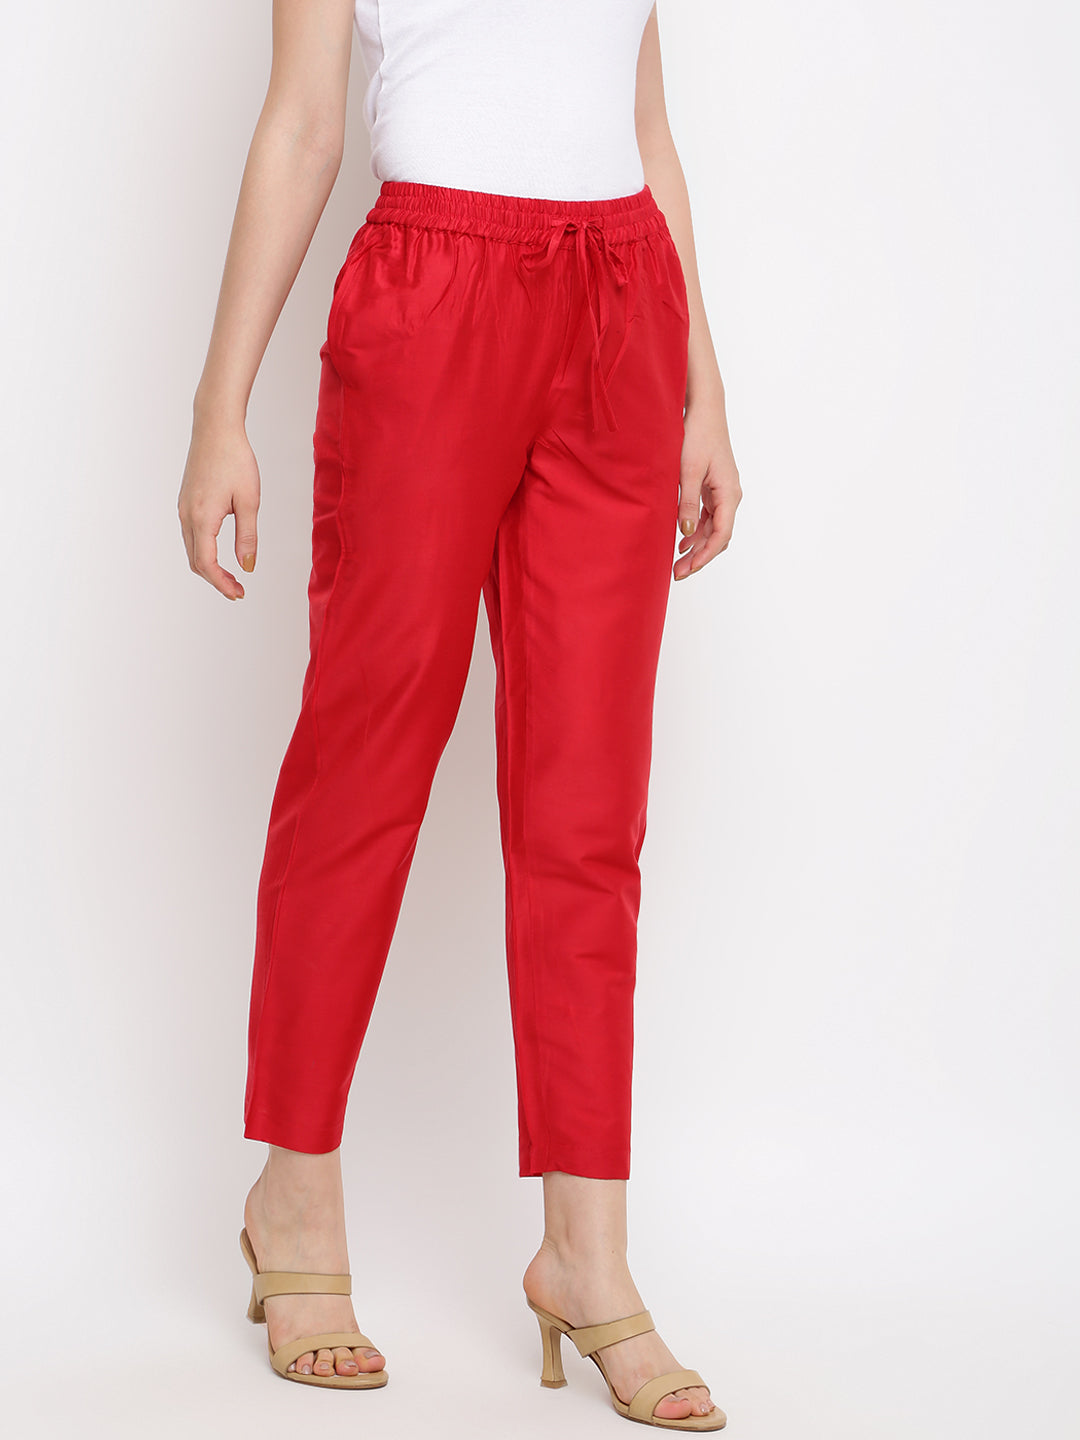 Women's Red Solid Straight Pants - IMARA